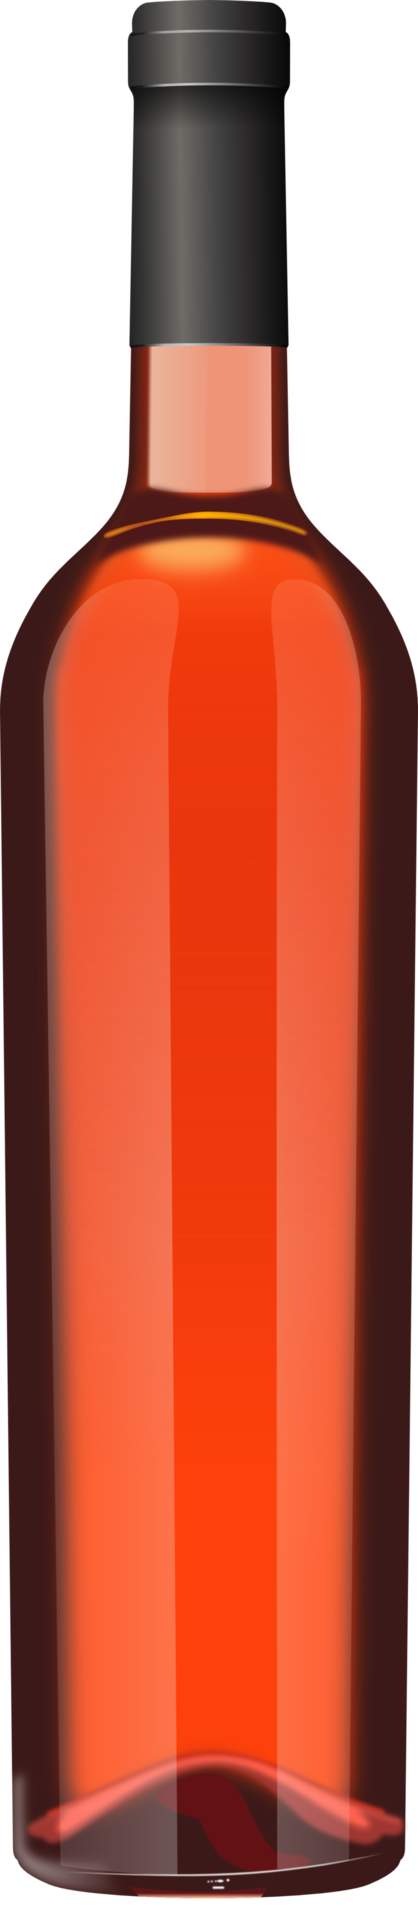 Rotweinflasche